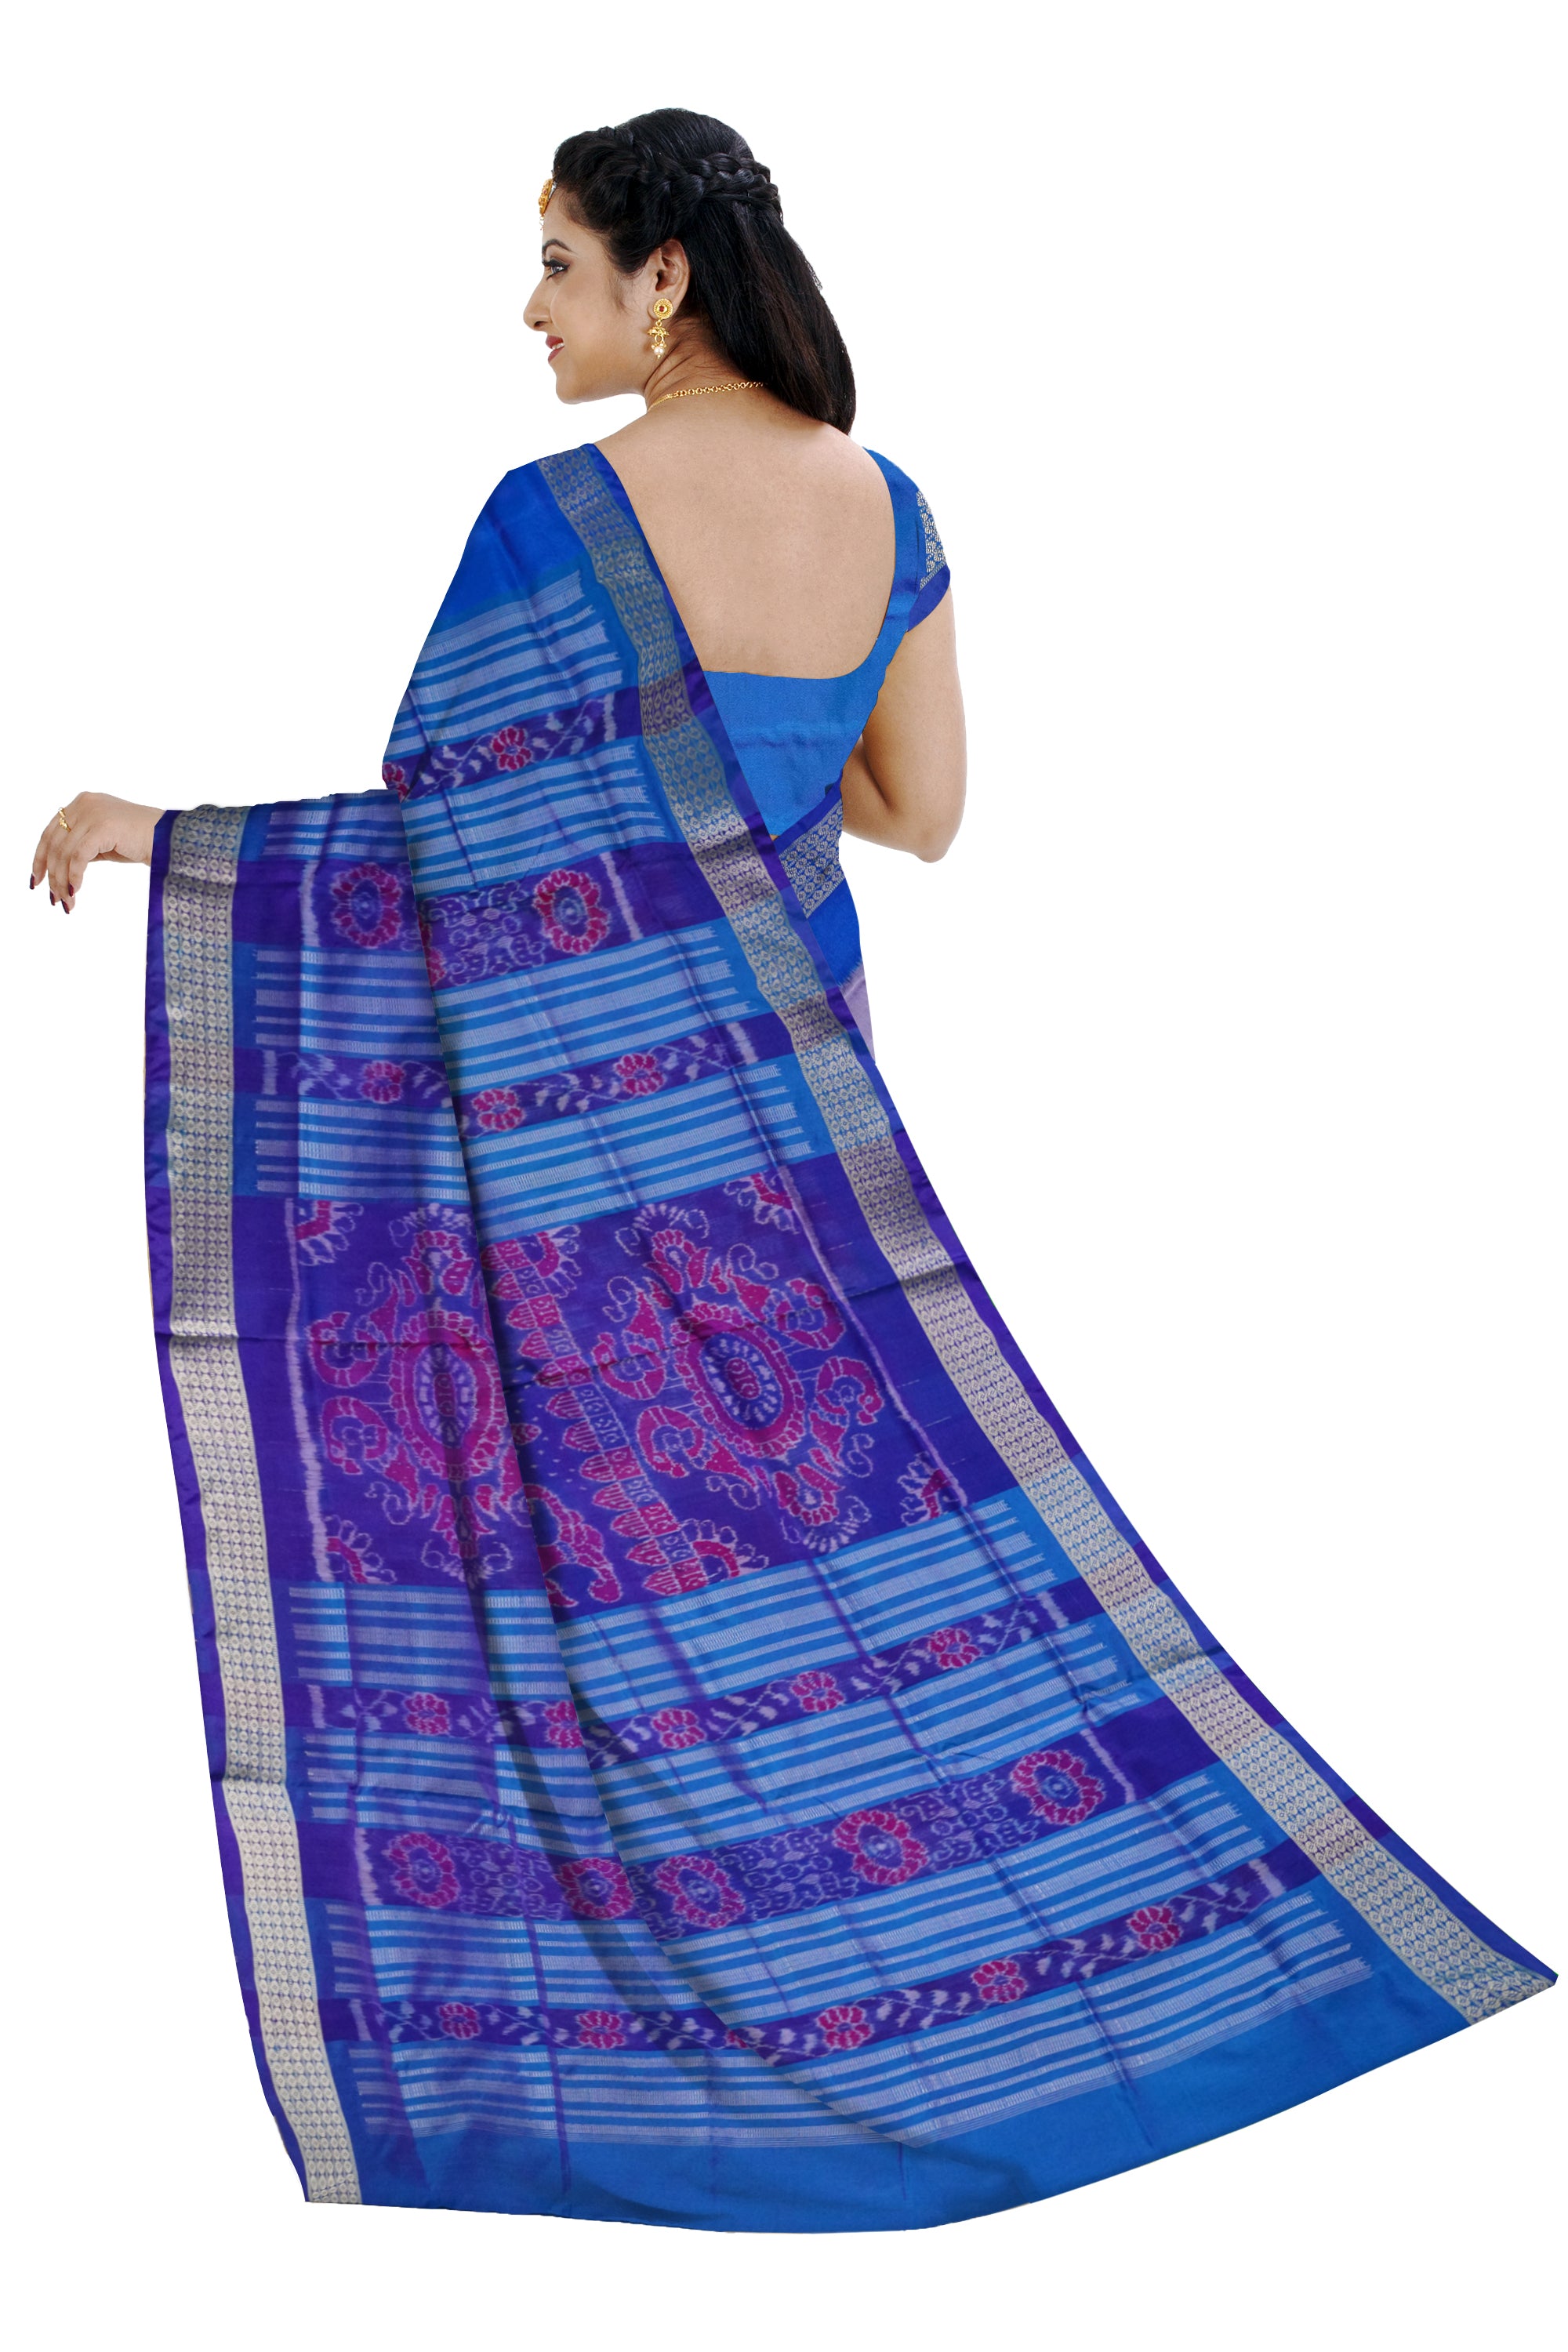 Sky-blue & maroon Sambalpuri pata saree, bandha pallu, matching blouse. - Koshali Arts & Crafts Enterprise